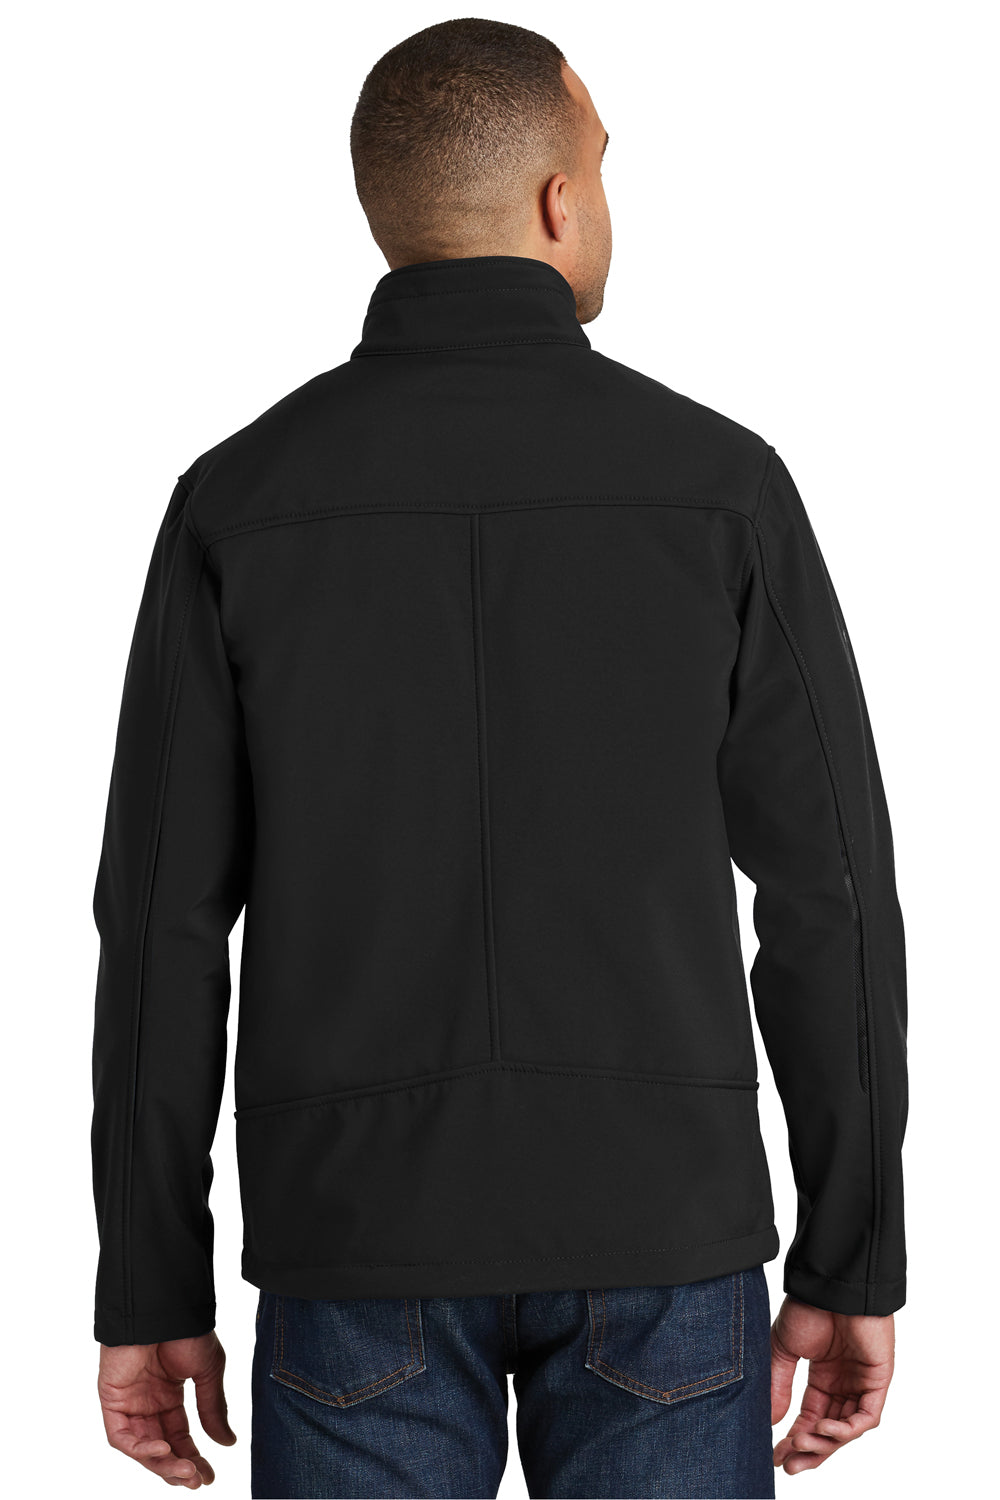 Port Authority J324 Mens Welded Wind & Water Resistant Full Zip Jacket Black Back